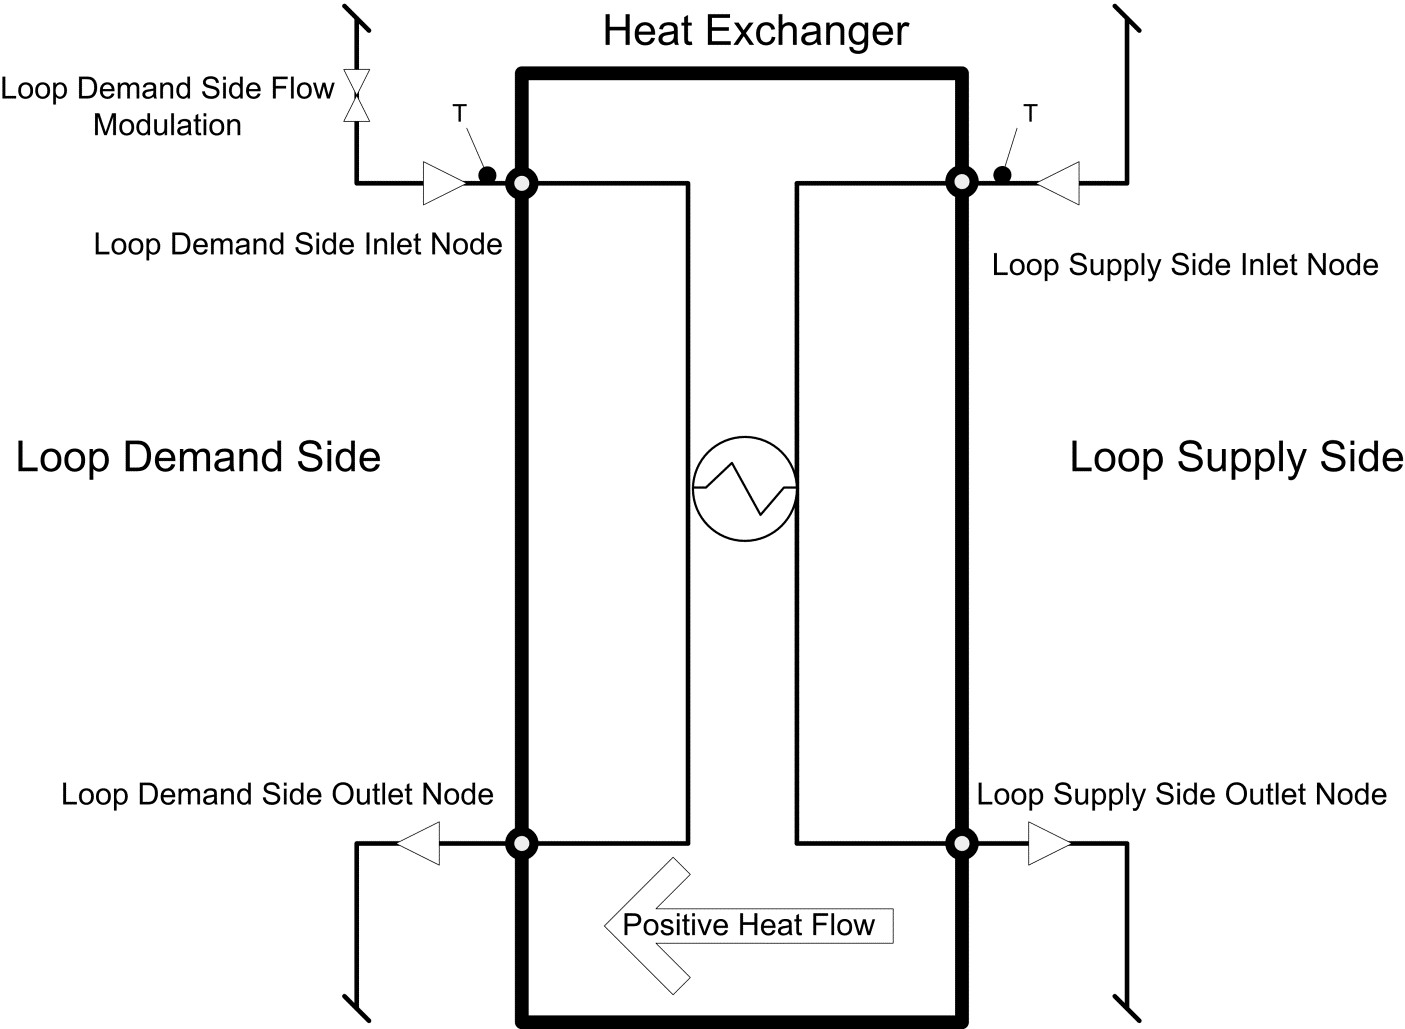 HX diagram draft.tif